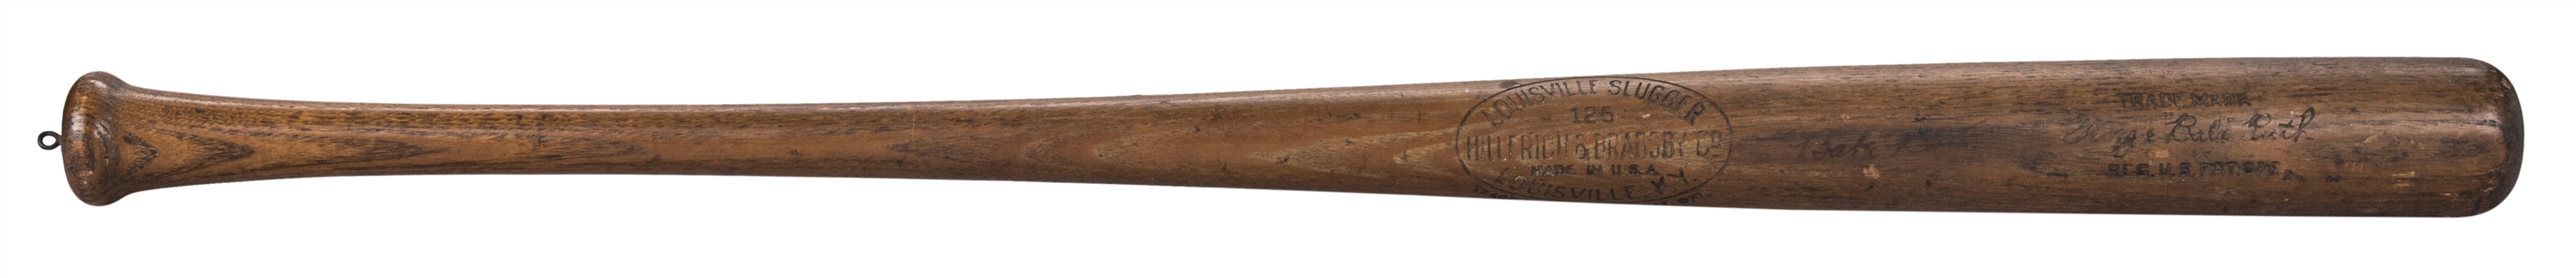 Babe Ruth Autographed Louisville Slugger H&B 125 George Babe Ruth Model Bat (JSA)